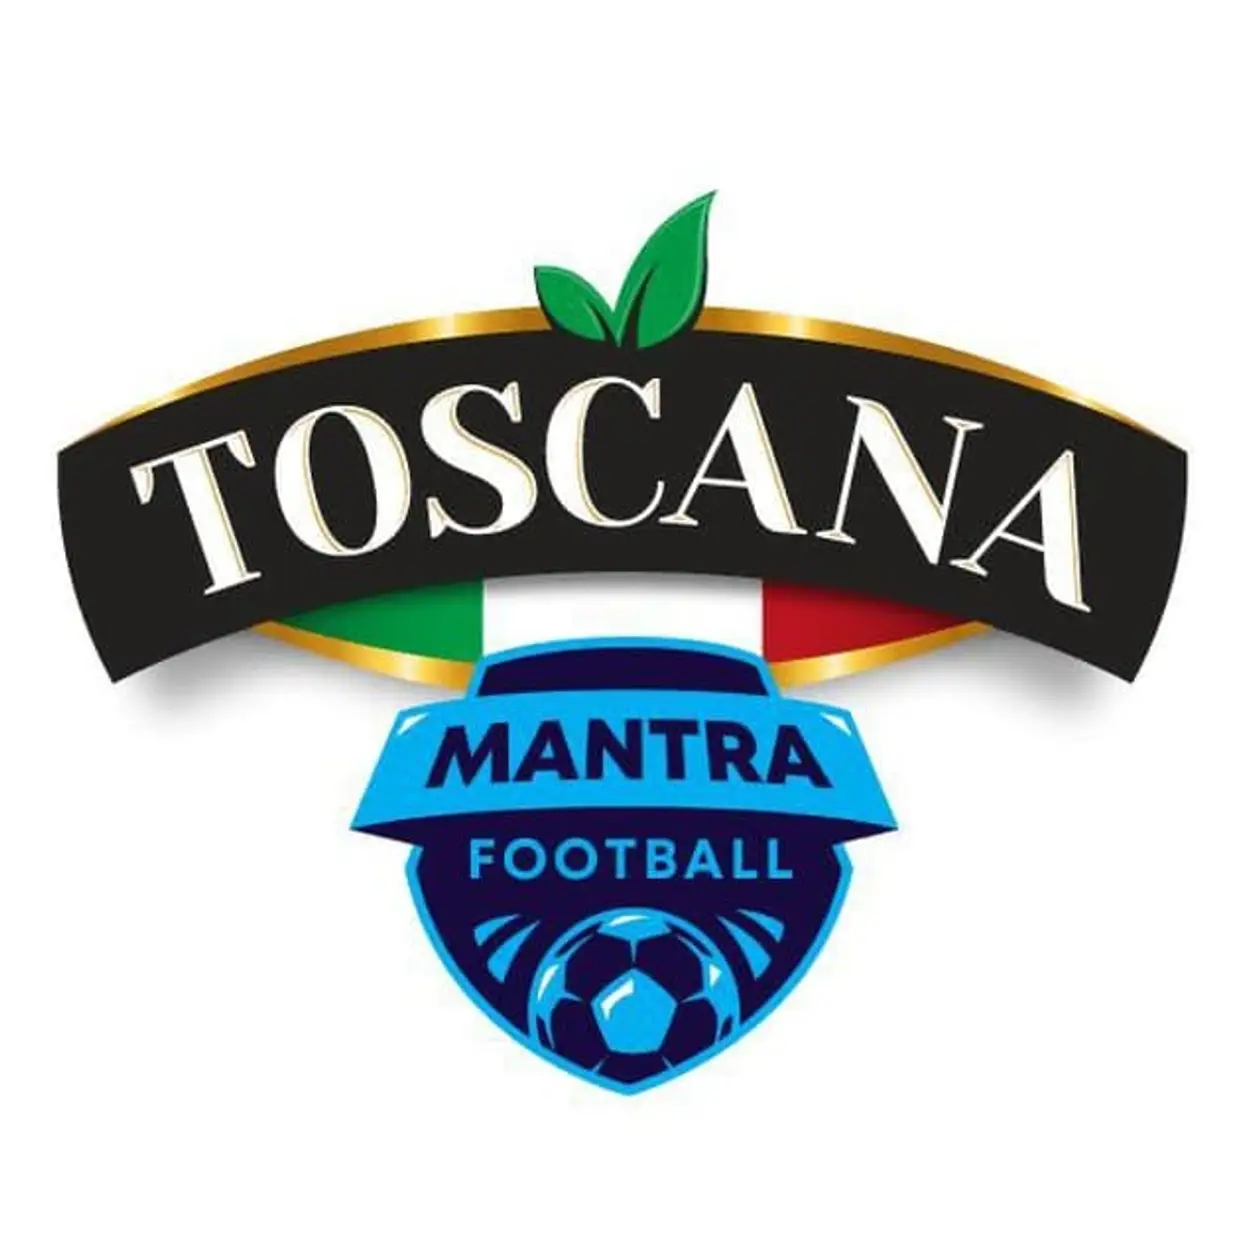 Toscana League 2 тур. Тренеры говорят